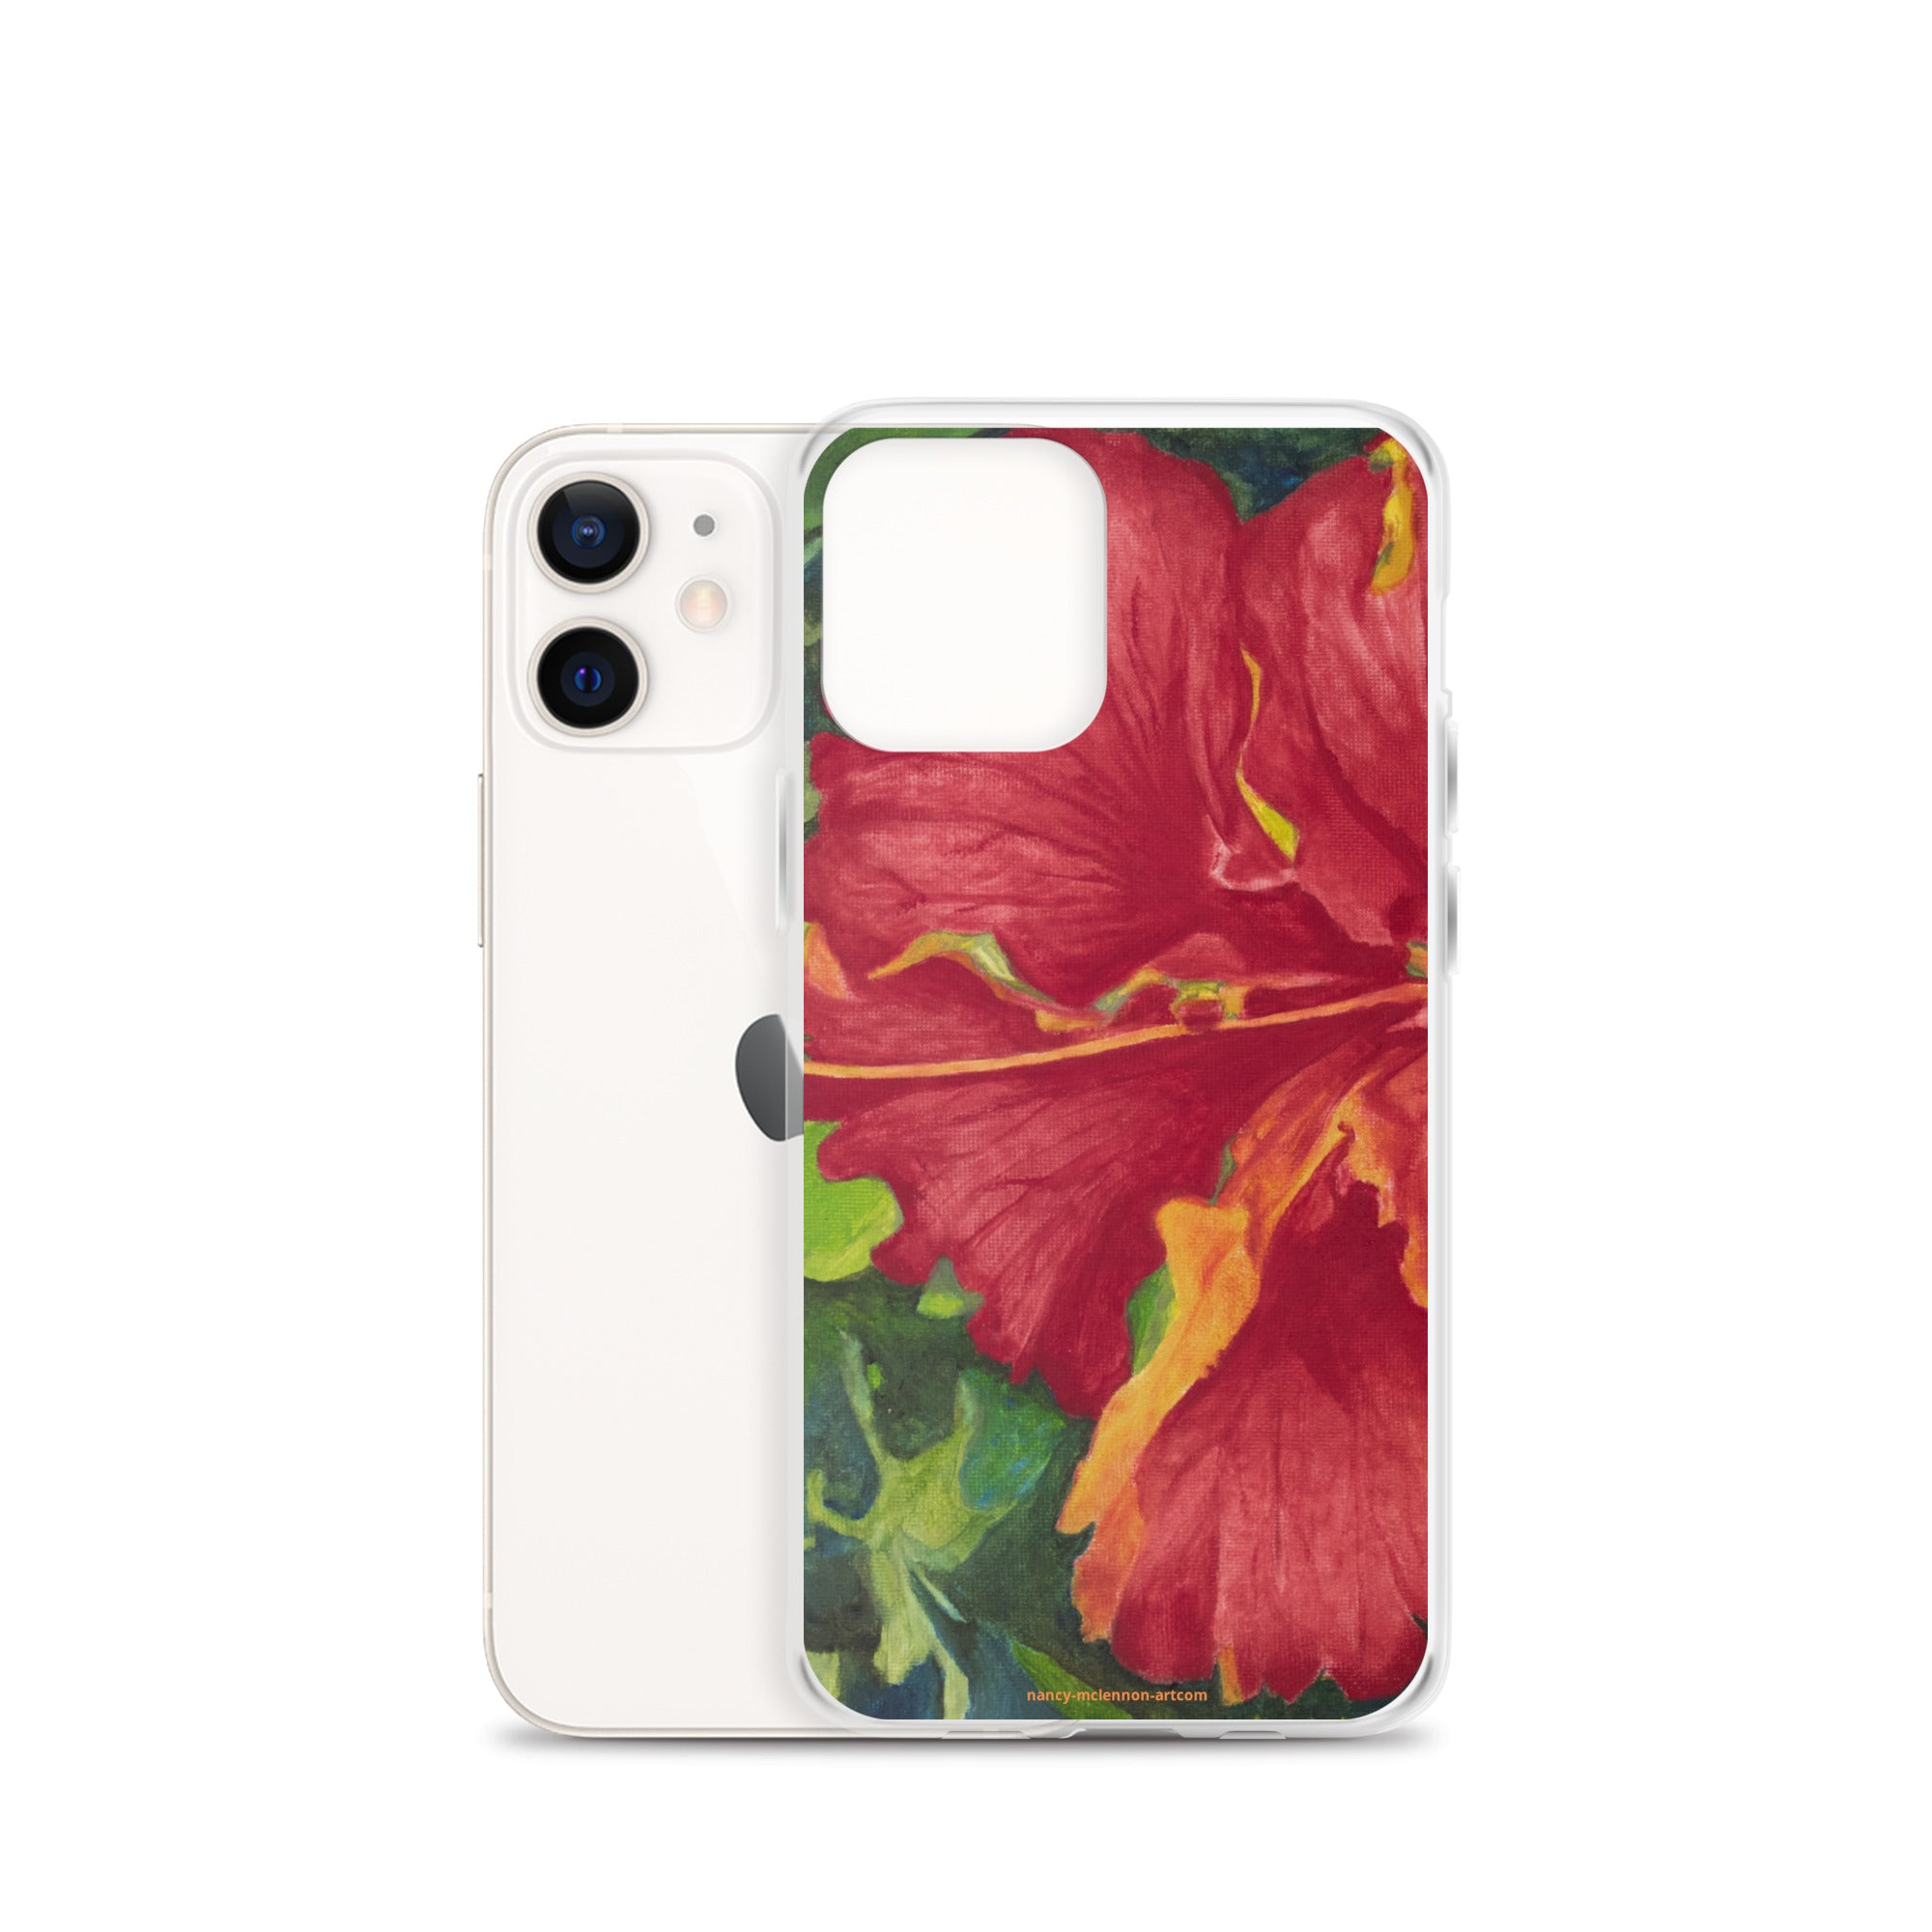 iPhone® Case - Deep Red Hibiscus